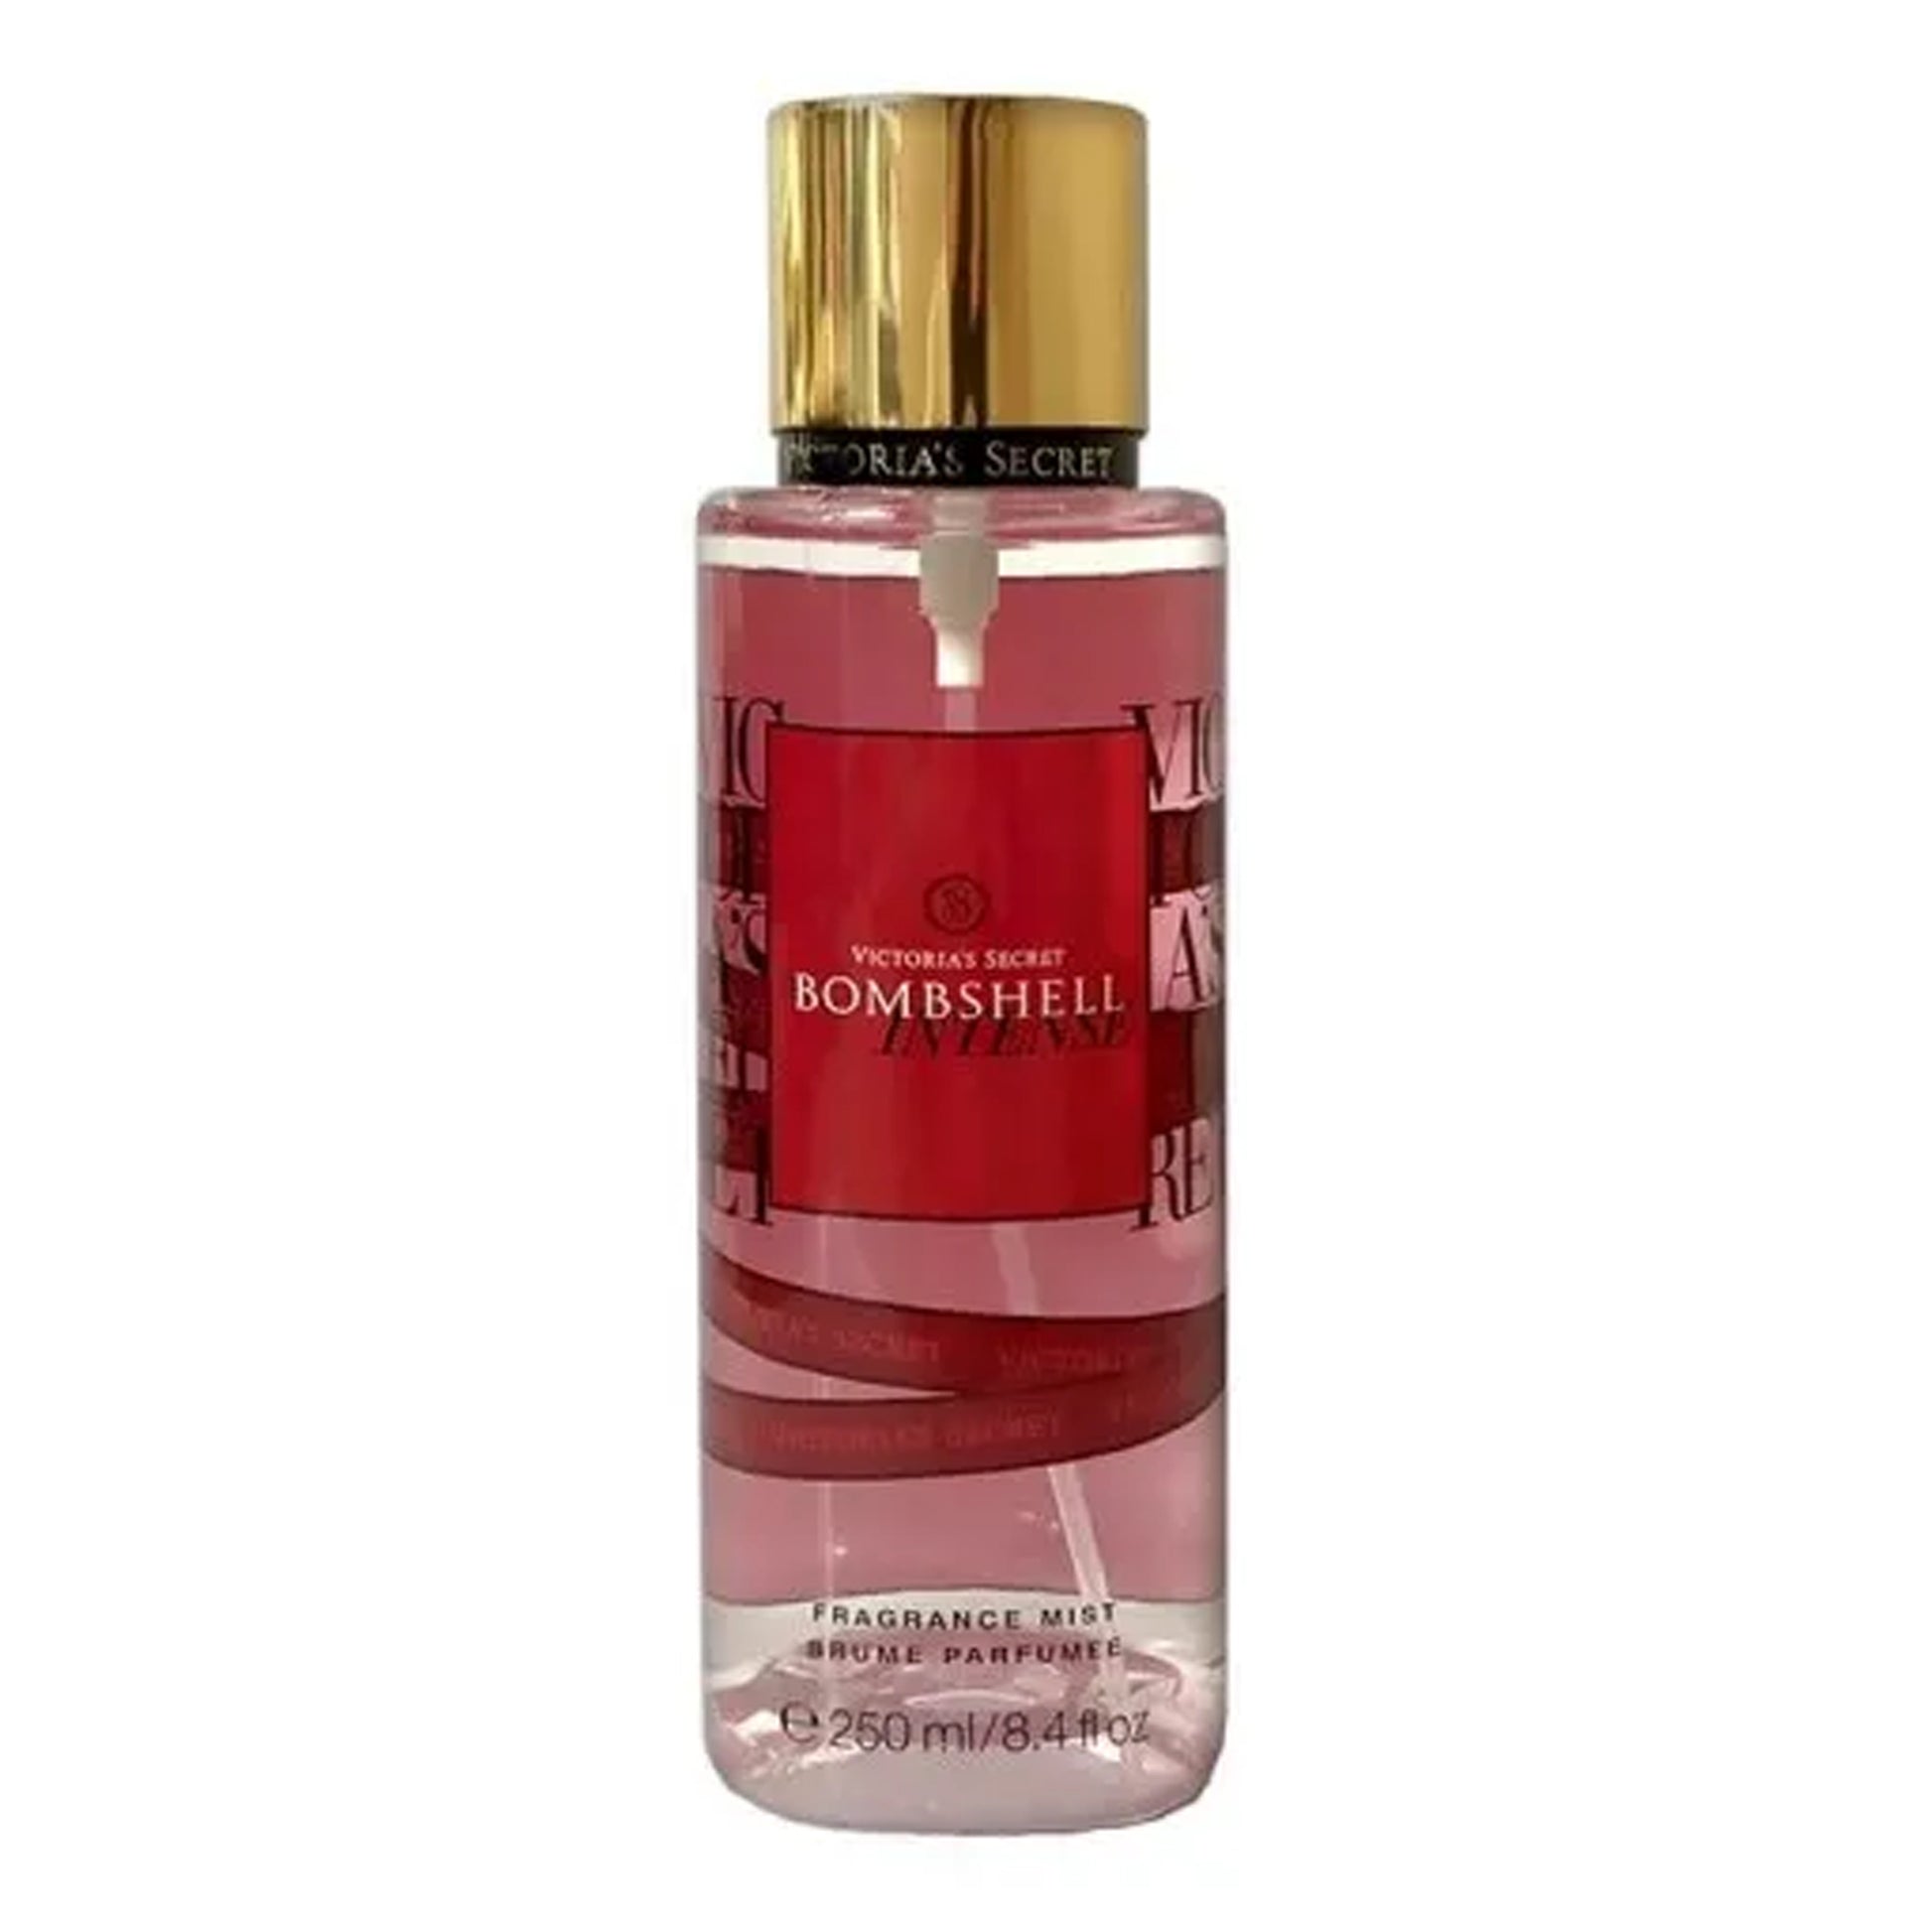 Buy Bombshell Intense Eau de Parfum - Order Fragrances online